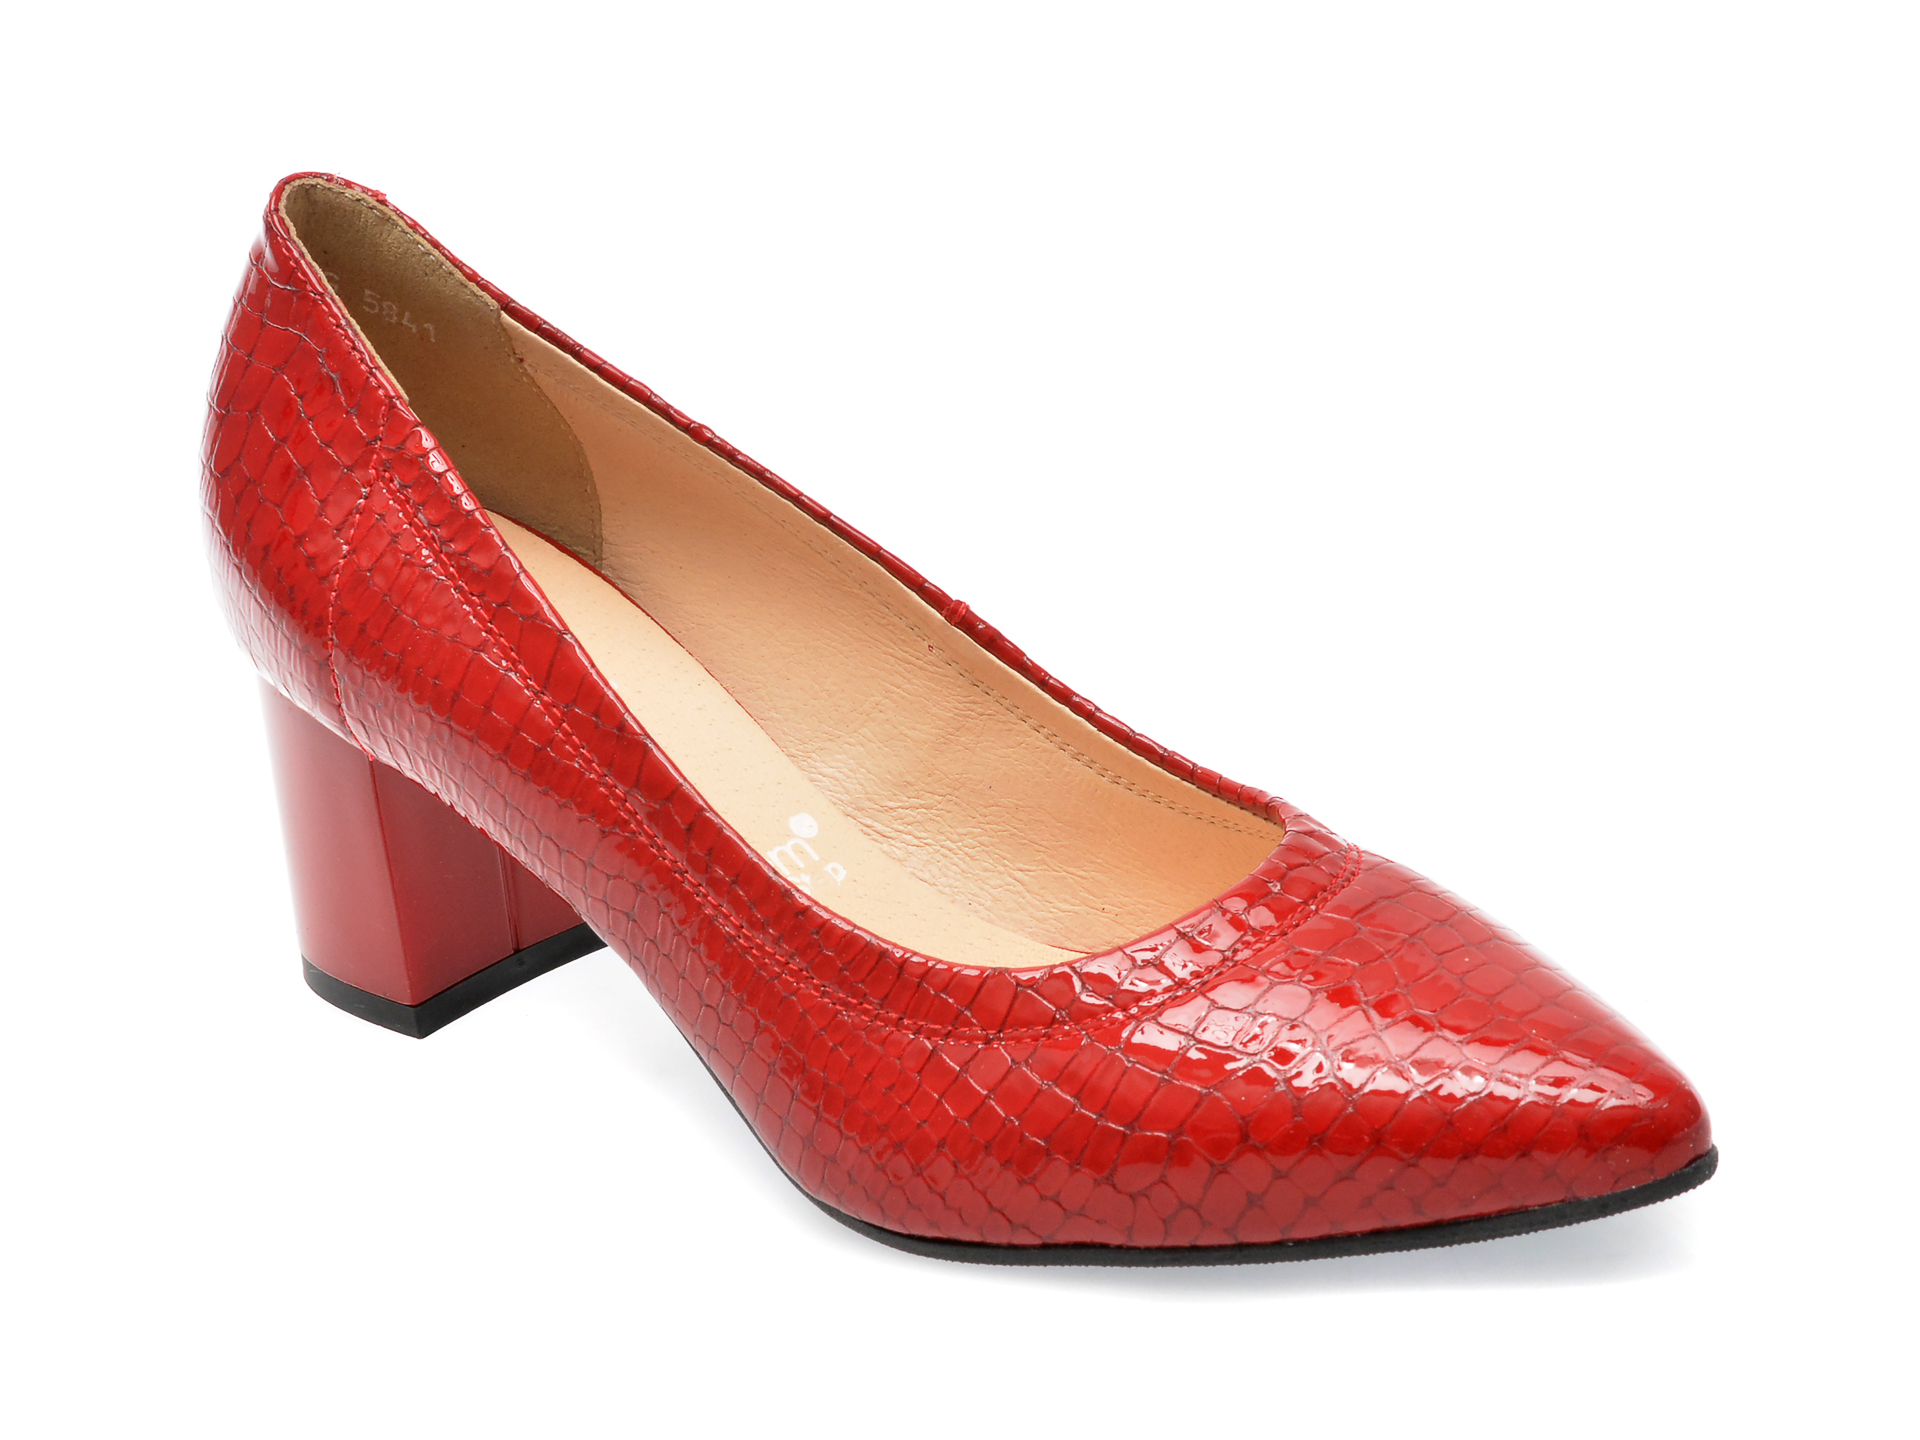 Pantofi eleganti IMAGE rosii, 5841, din piele naturala lacuita